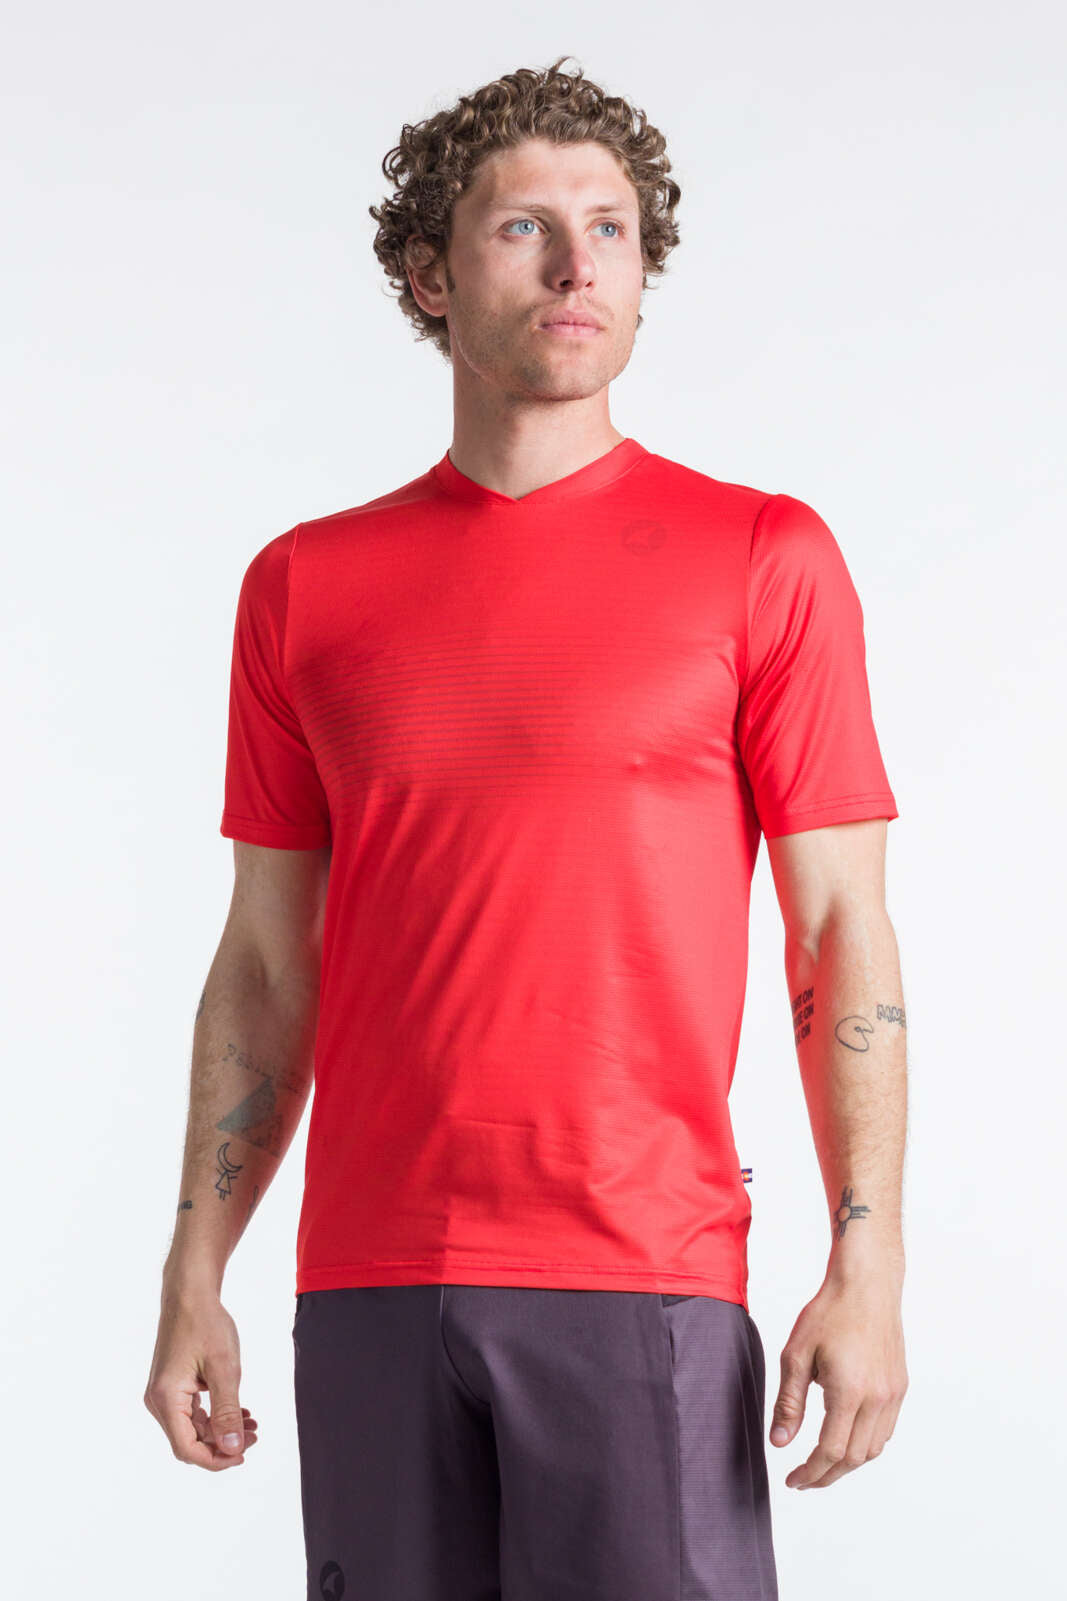 Men's Red Running Shirt - Front View